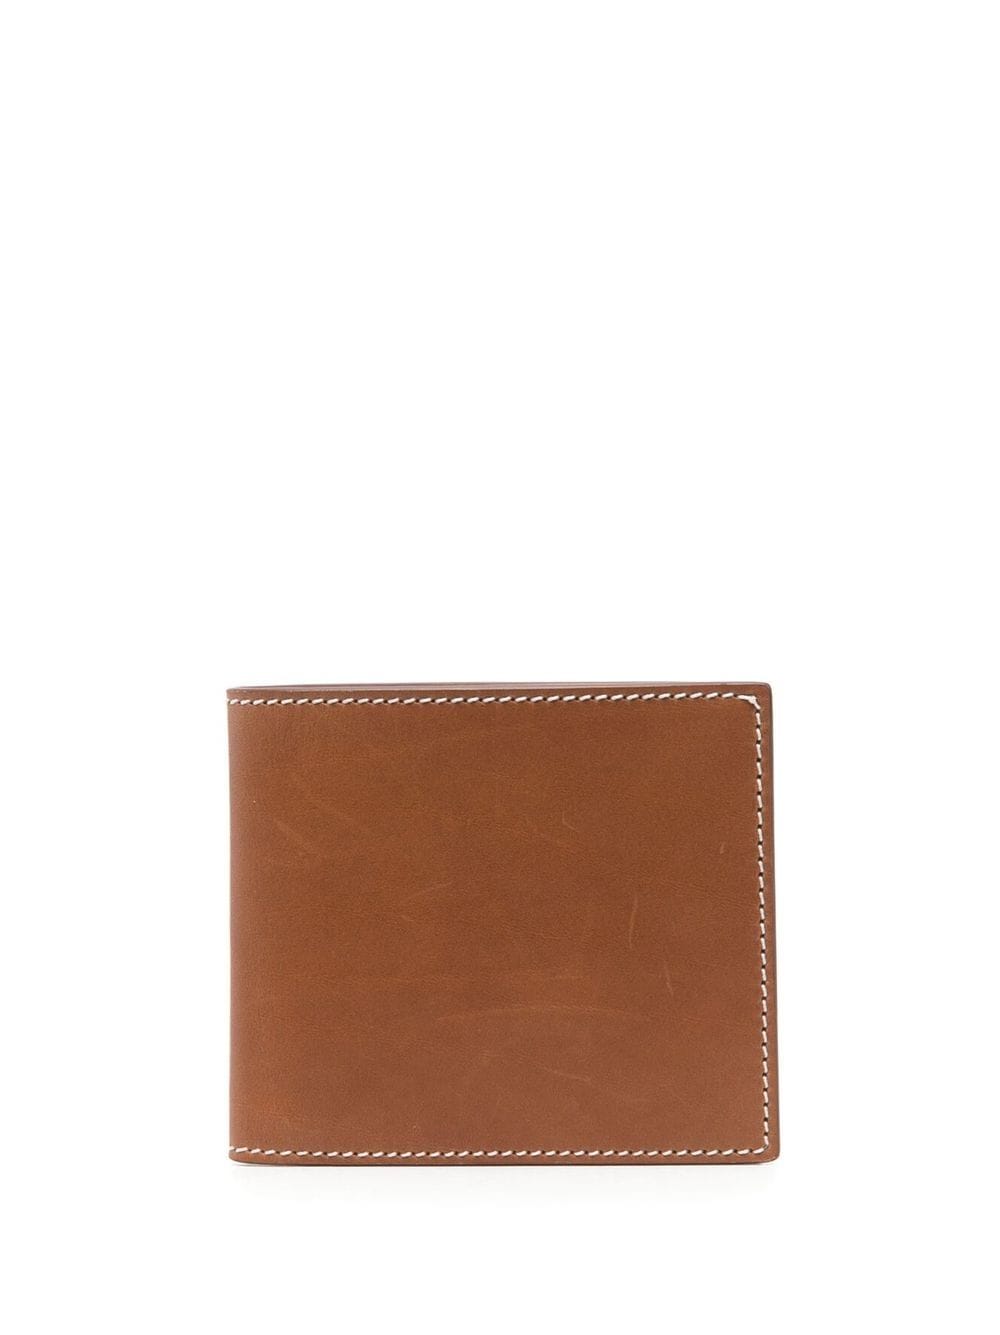 Image 1 of Thom Browne bi-fold leather wallet